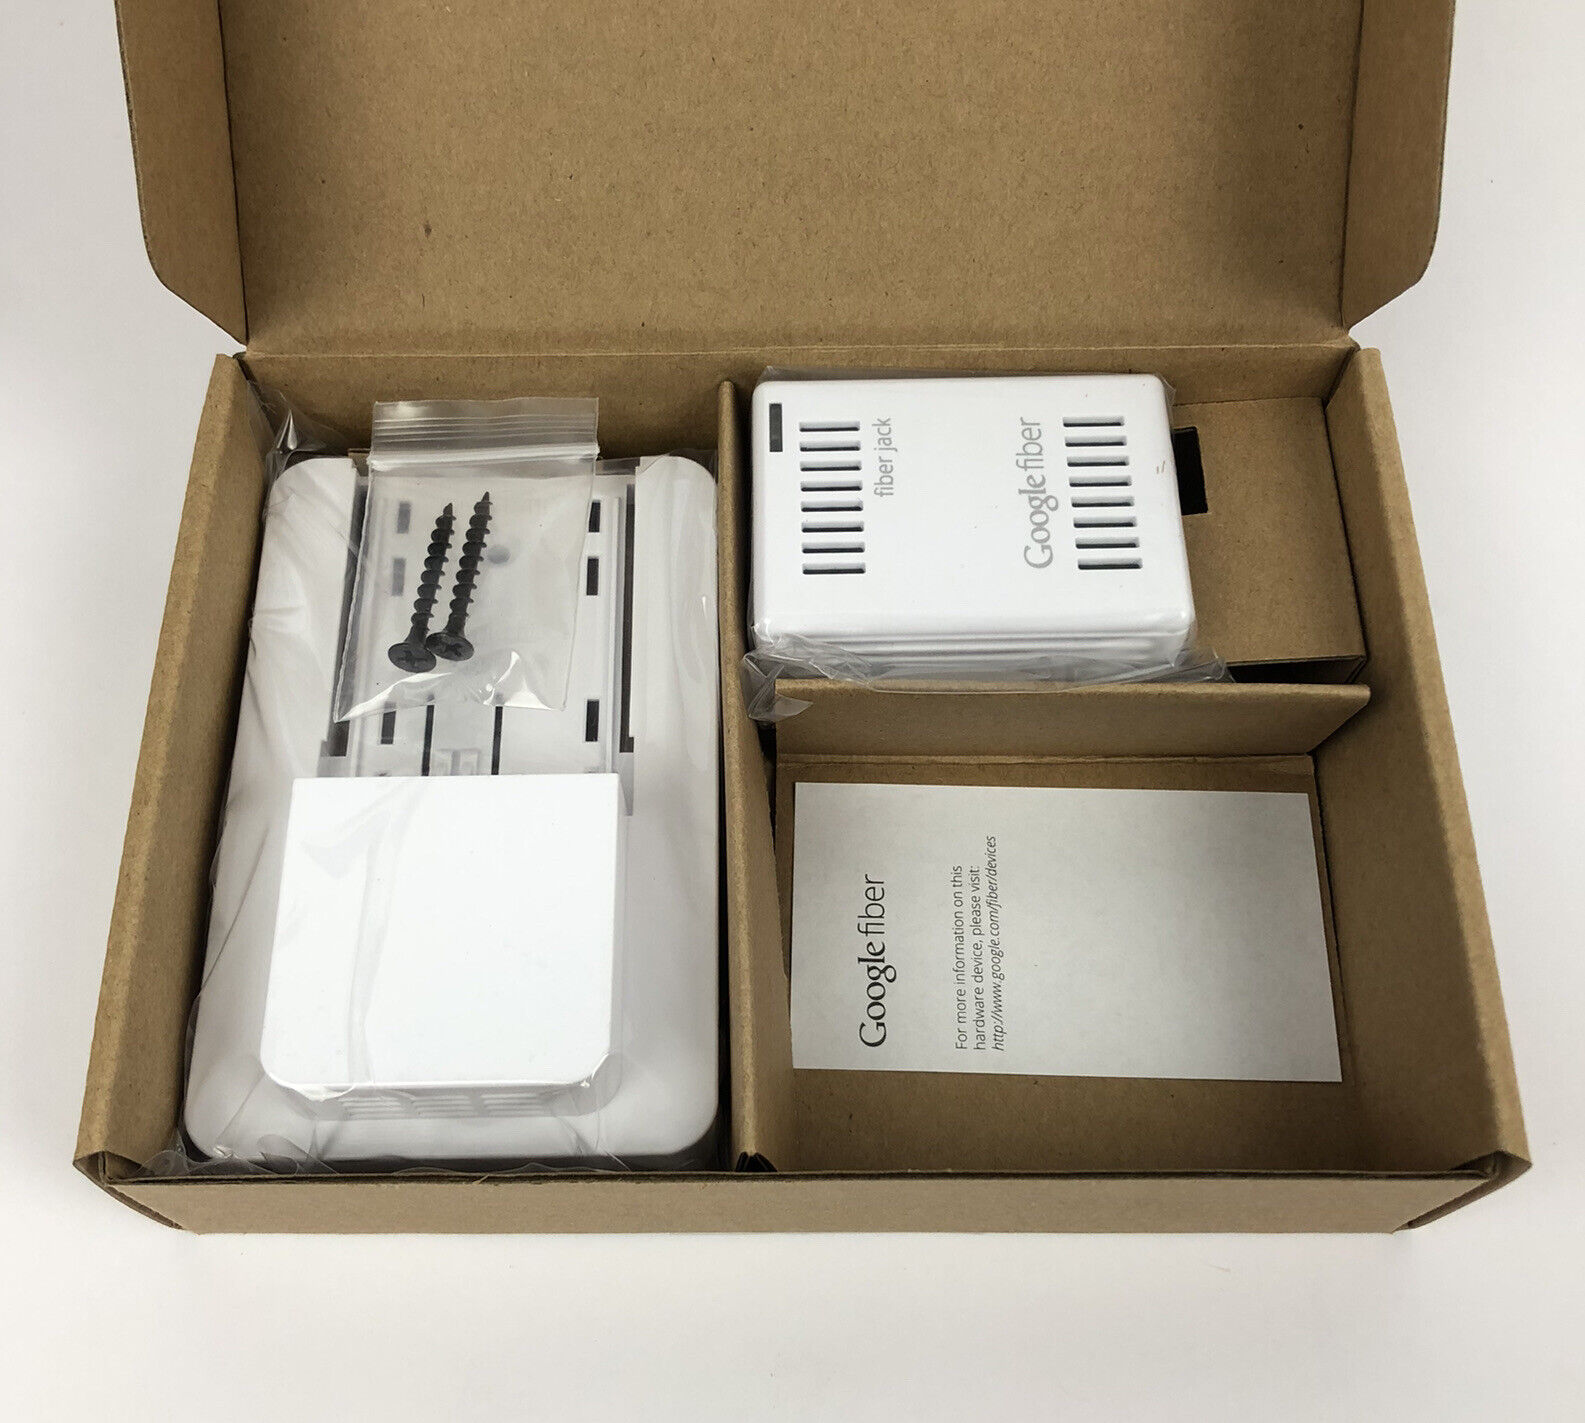 2 Google Fiber Jacks & Base GFLT110 NEW IN BOX SEALED From Manufacturer Google Fiber 86003010-07 - фотография #10